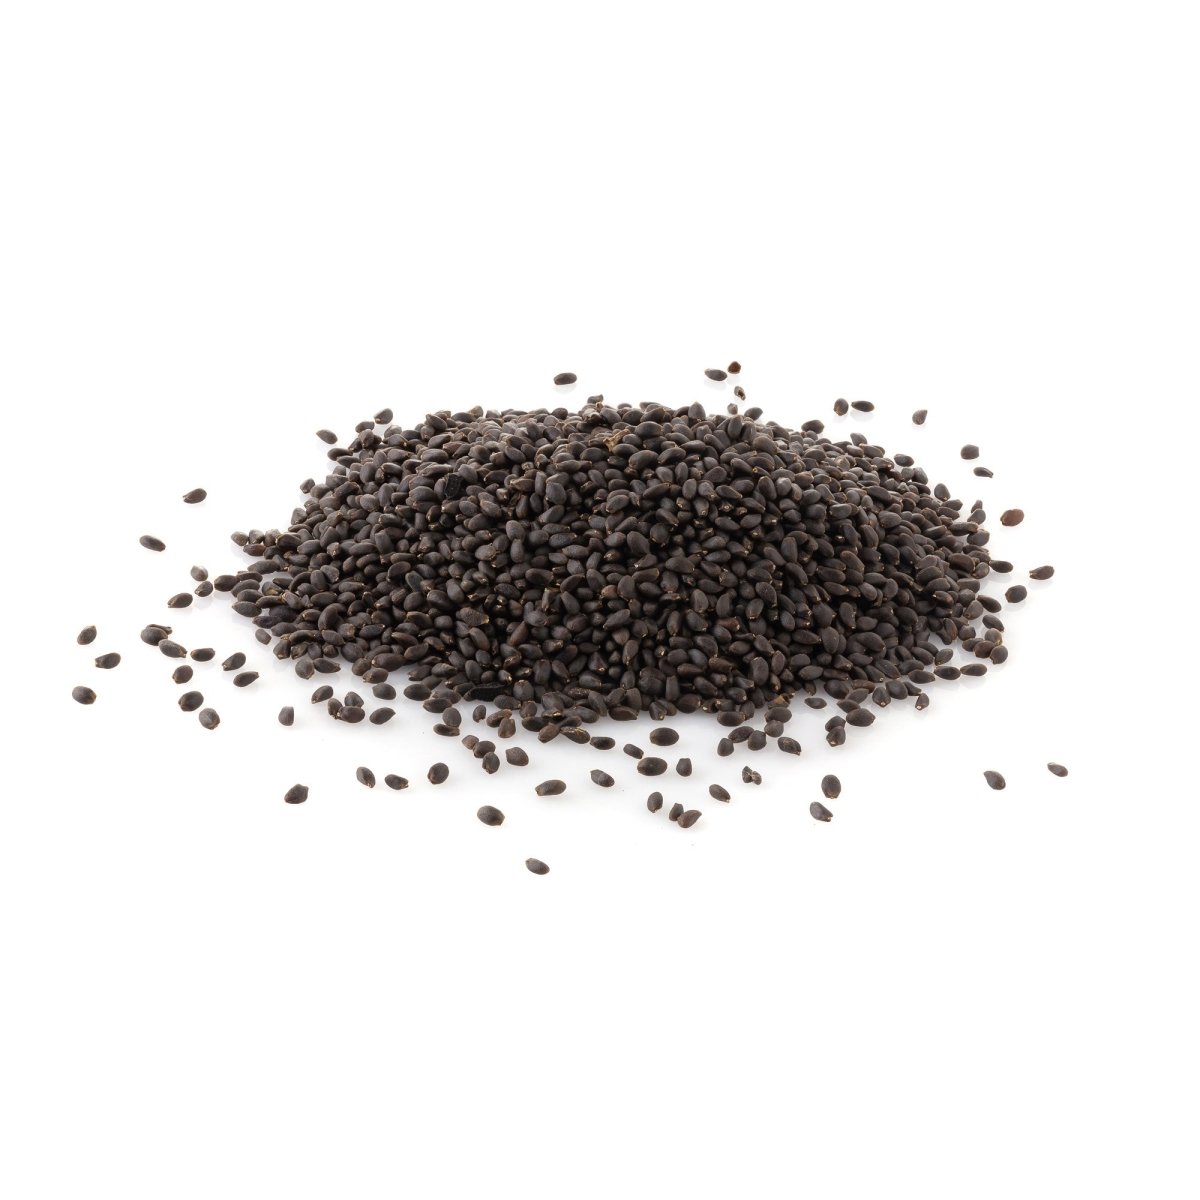 Basil Seeds / Takmaria / Sabja Seeds - Tulsidas